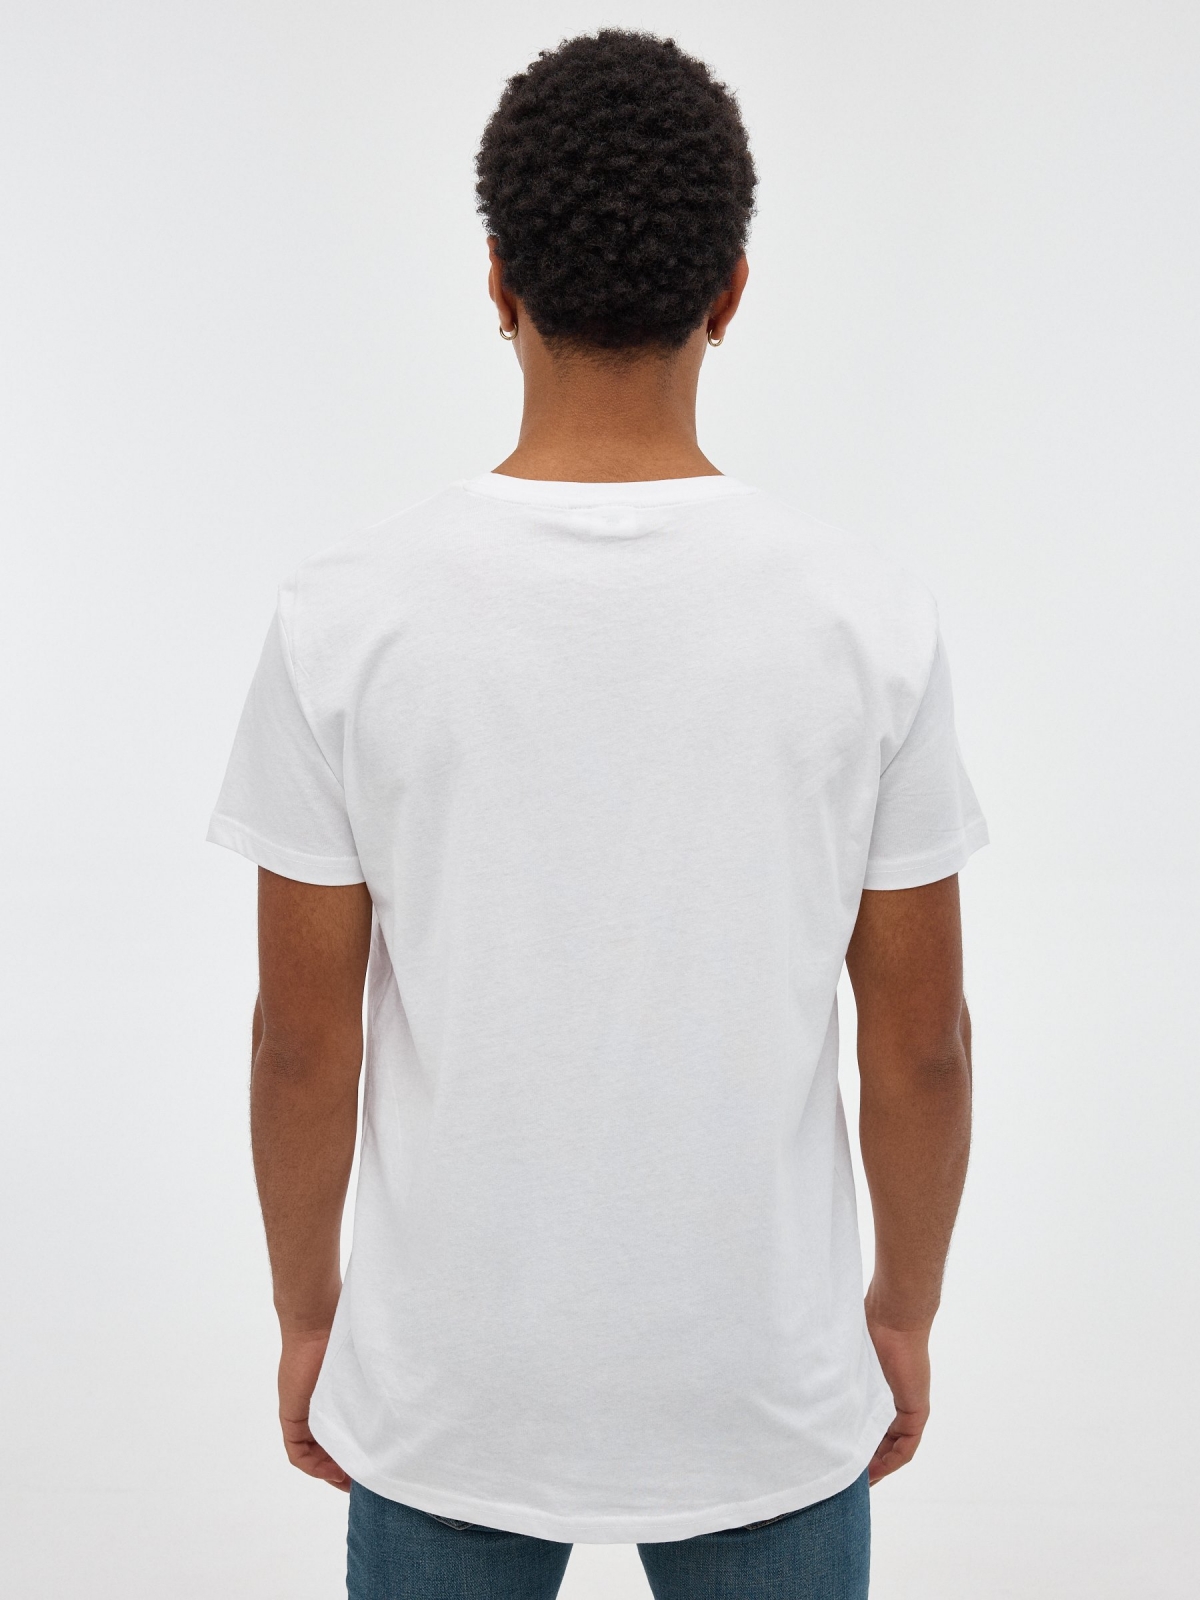 Dragon Ball t-shirt white middle back view